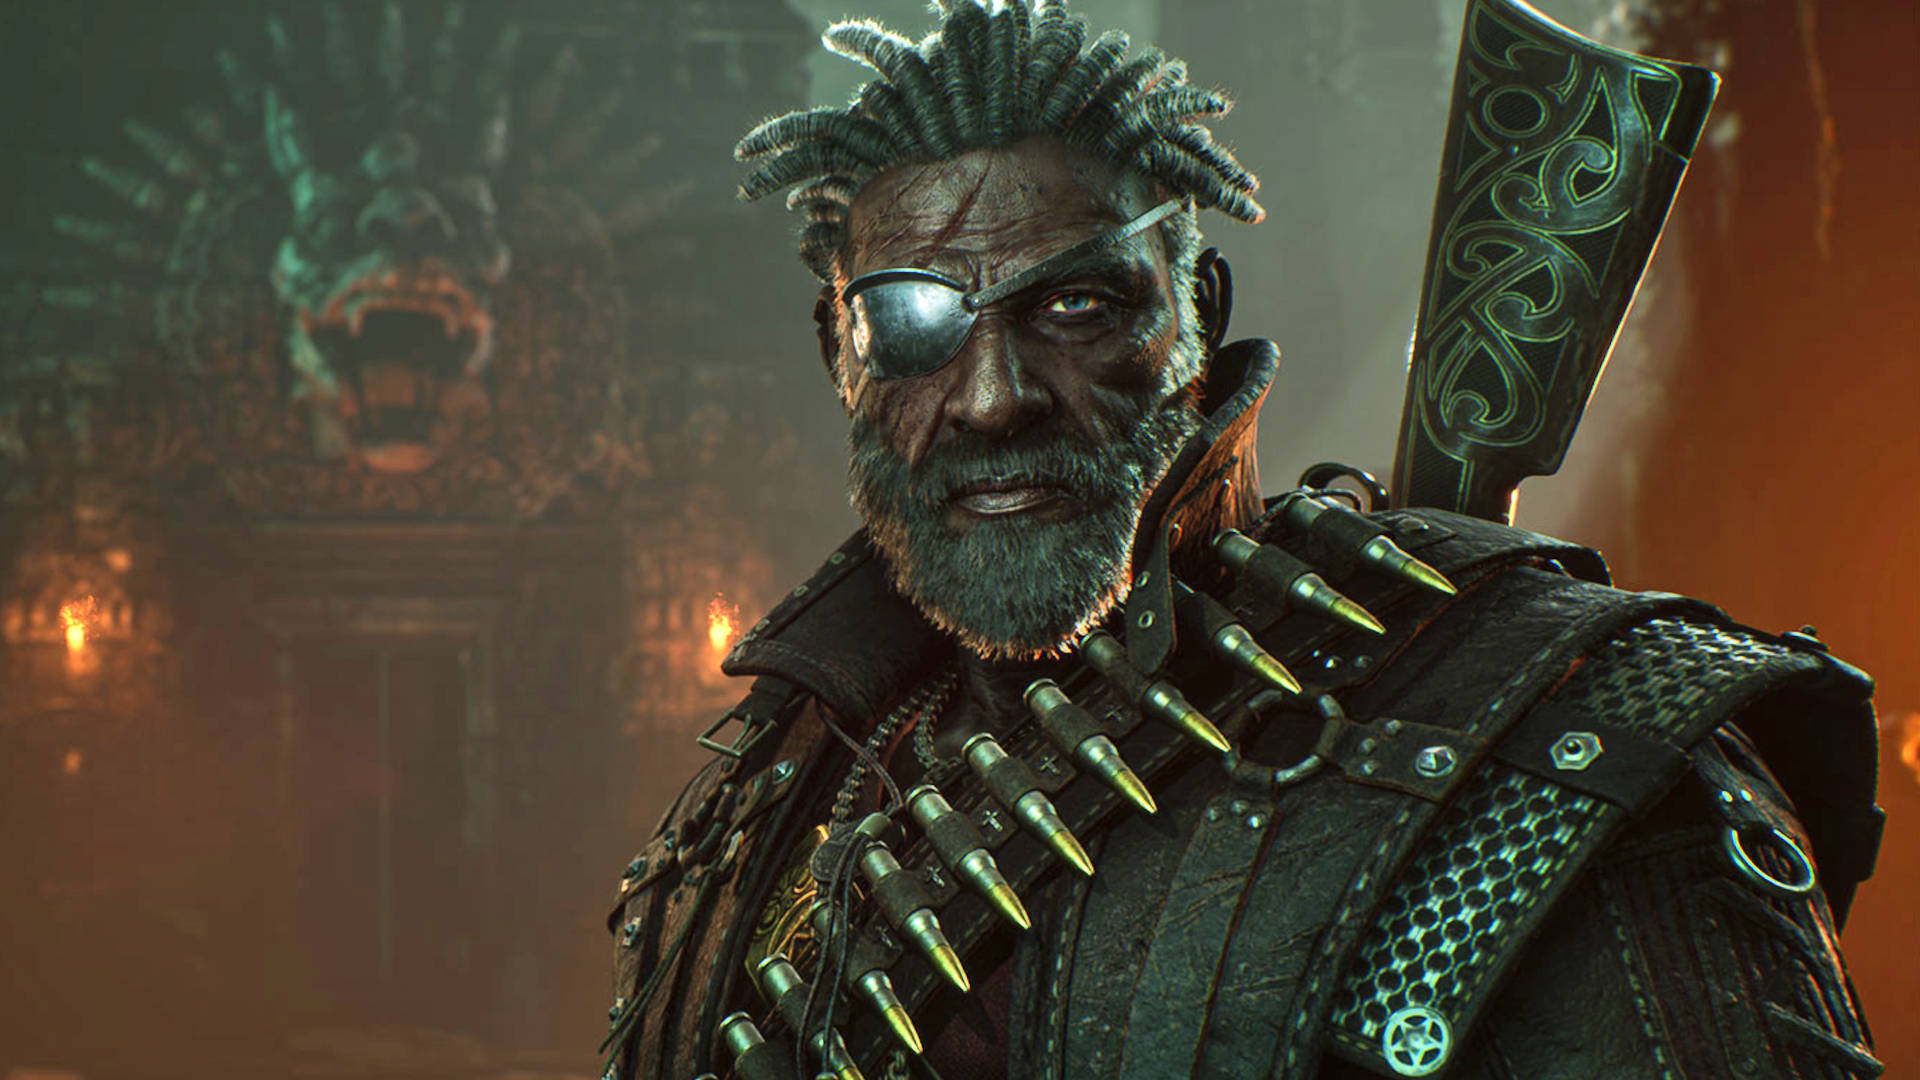 Evil West gets extended gameplay showing off more dark fantasy